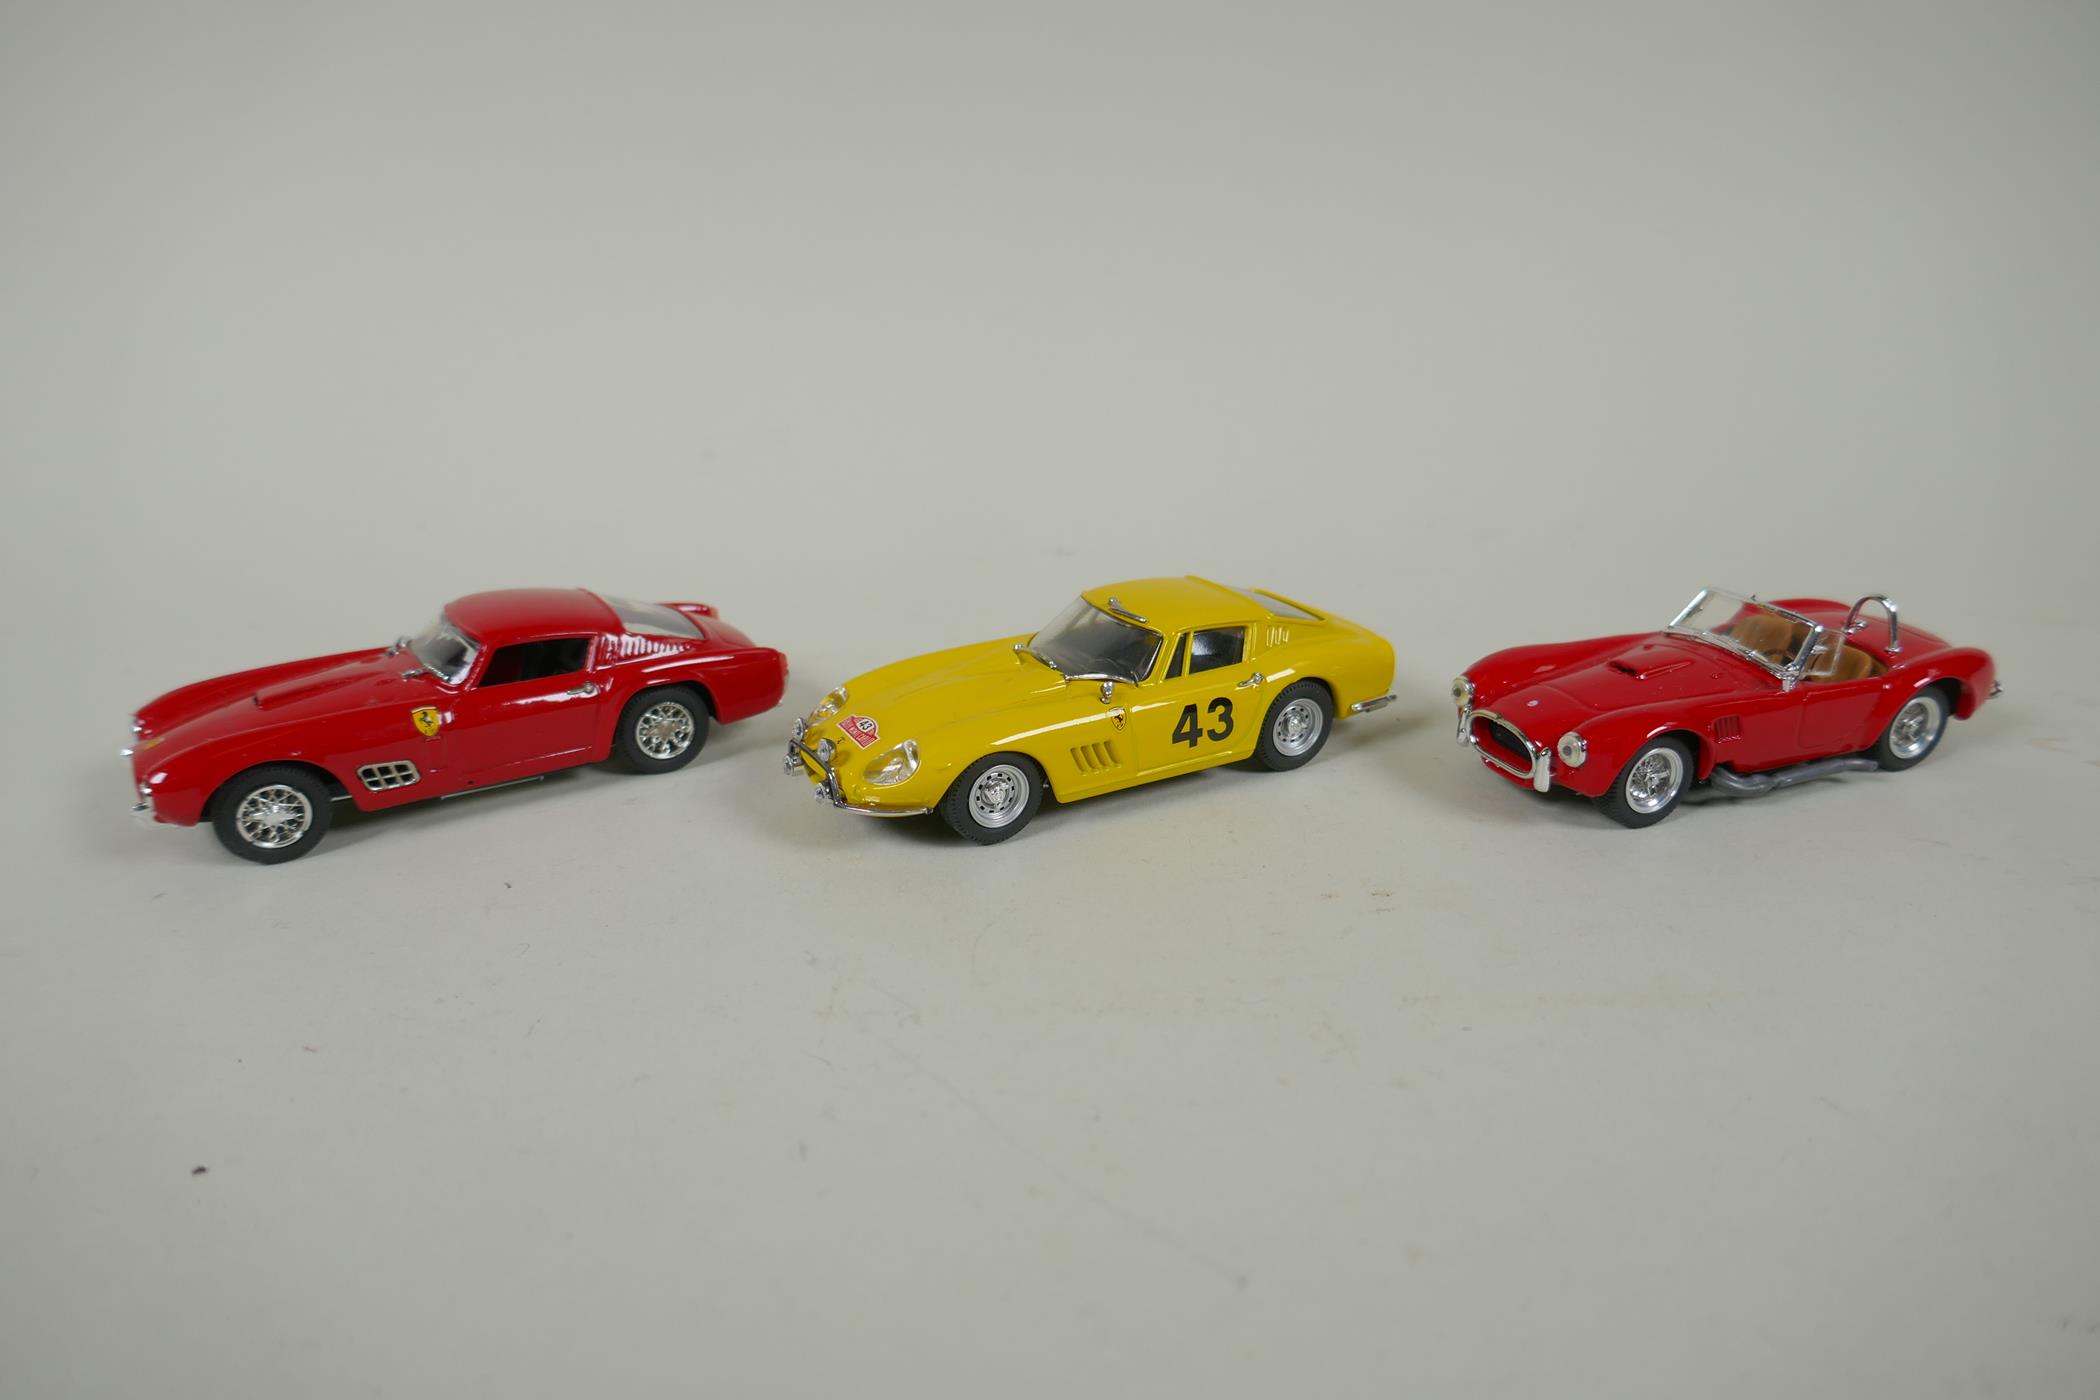 Twenty six Model Box die cast 1:43 scale model cars, to include a Ford GT40, a Ferrari 275 GTB, a - Image 7 of 8